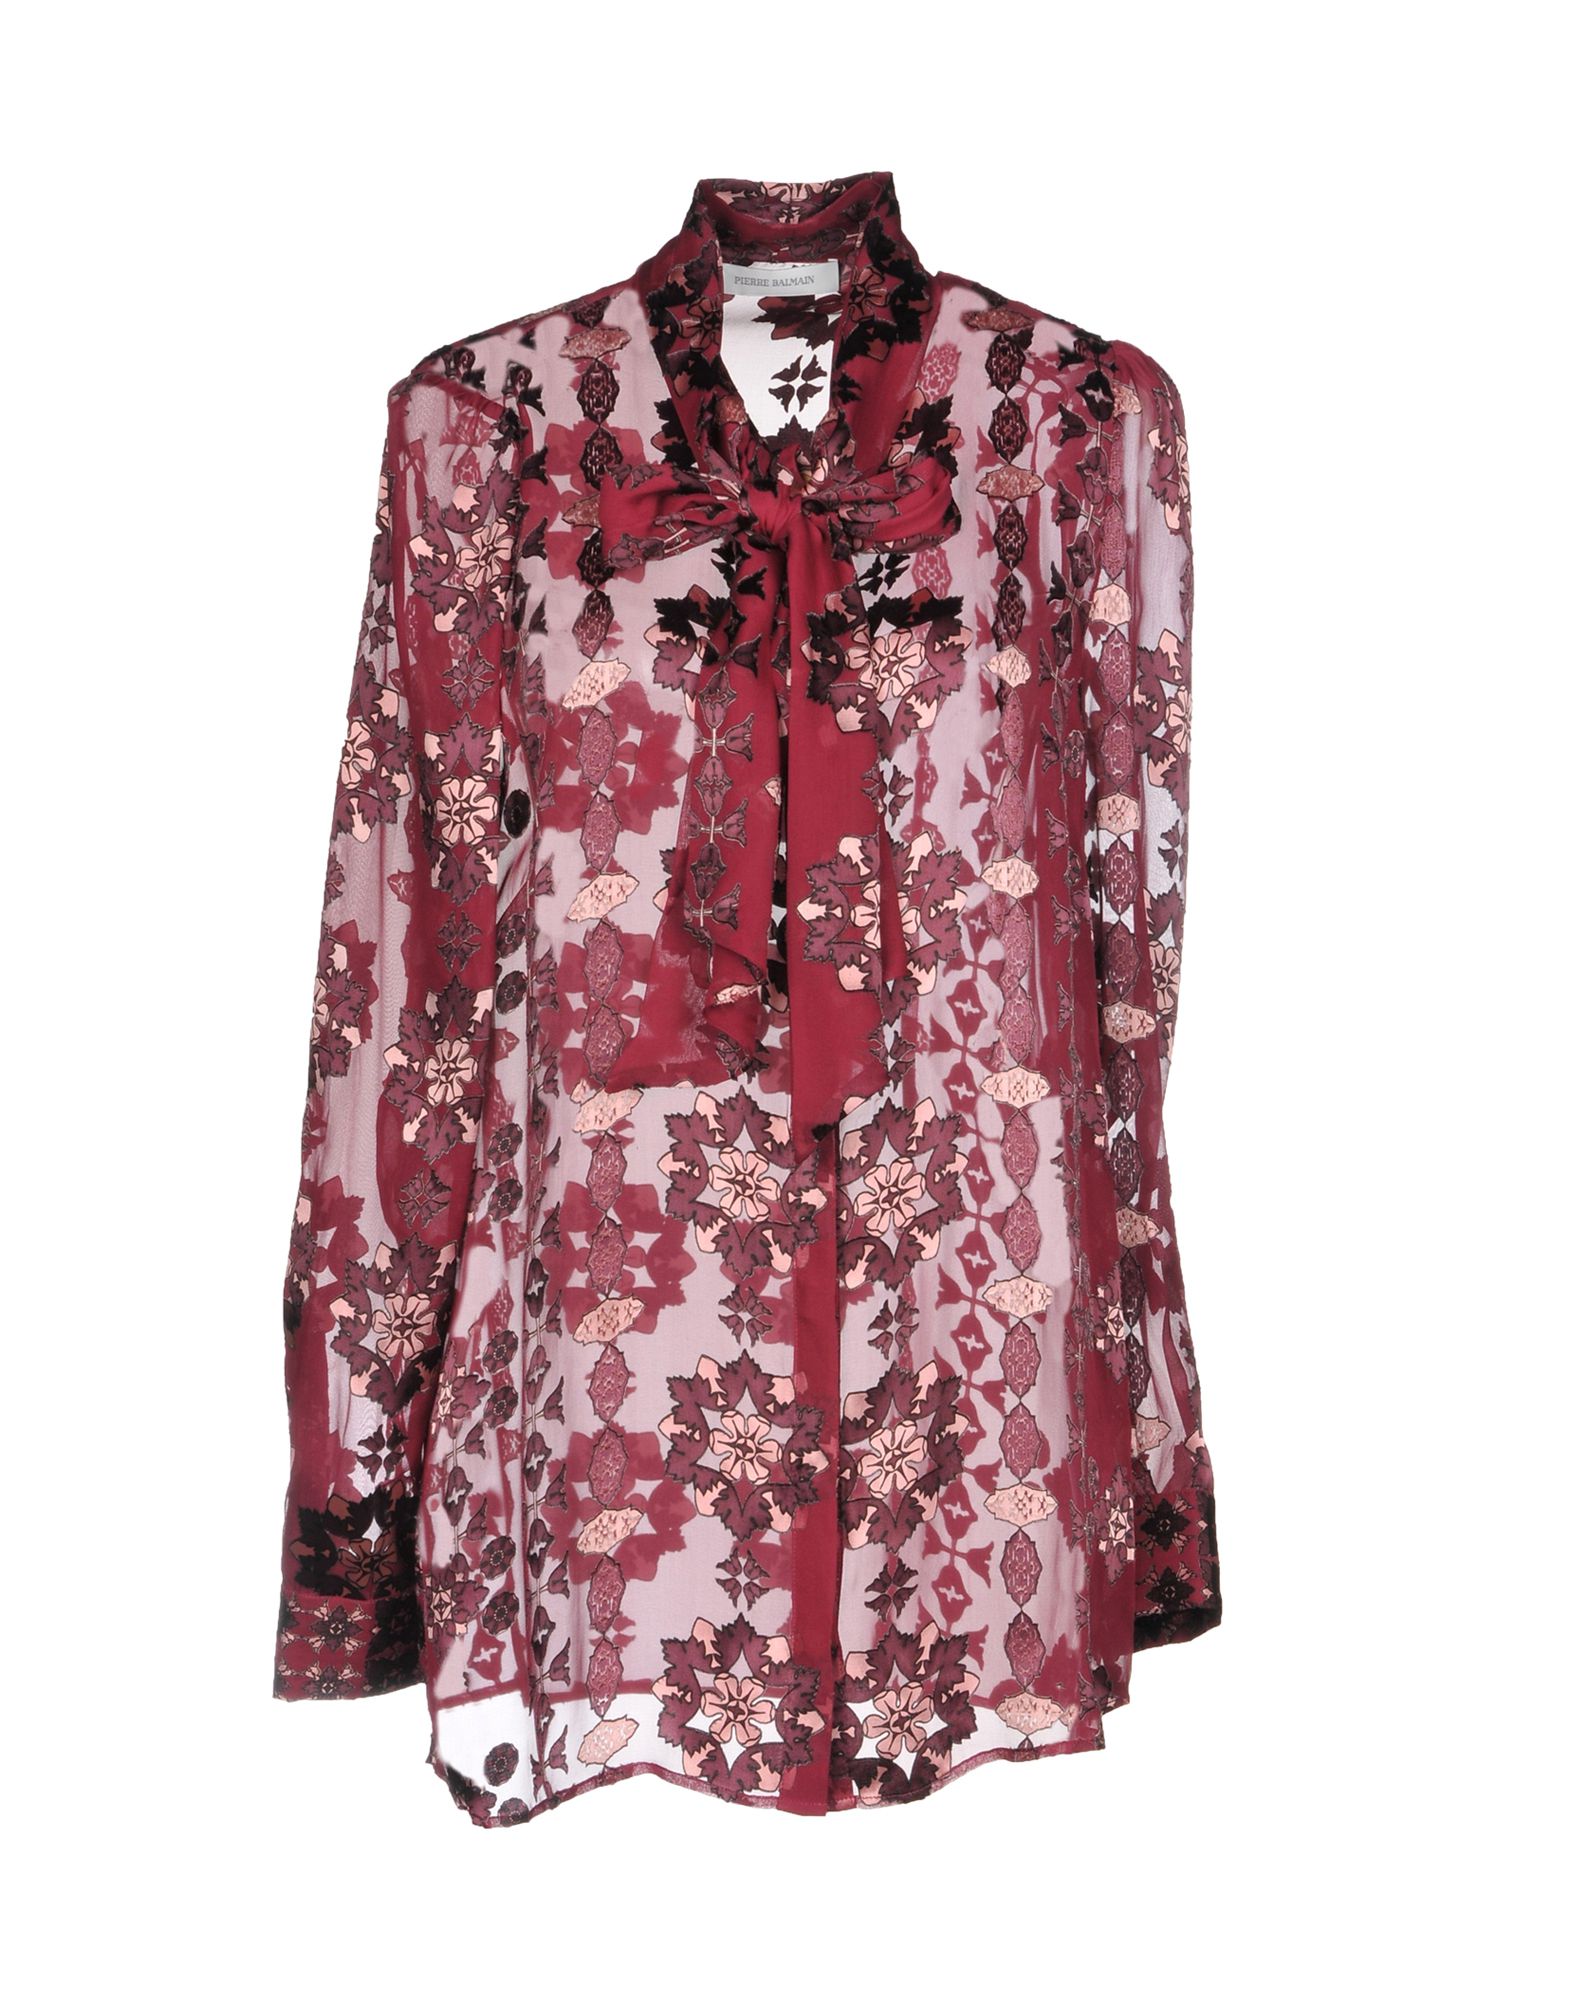 PIERRE BALMAIN Floral shirts & blouses,38749880JJ 6